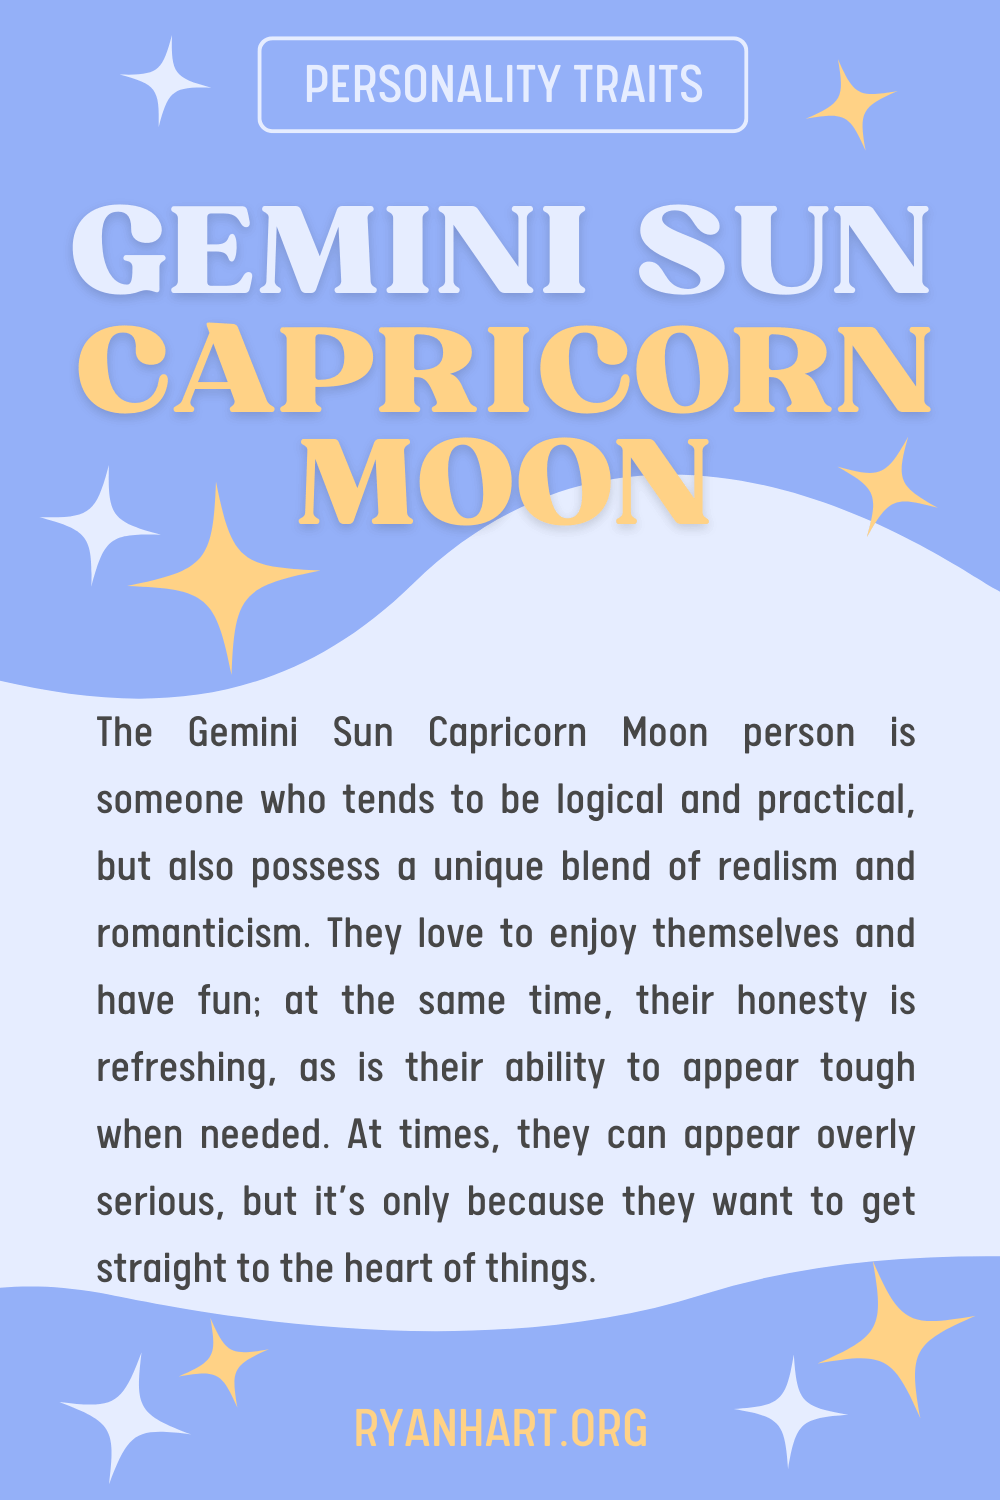 Gemini Sun Capricorn Moon Description